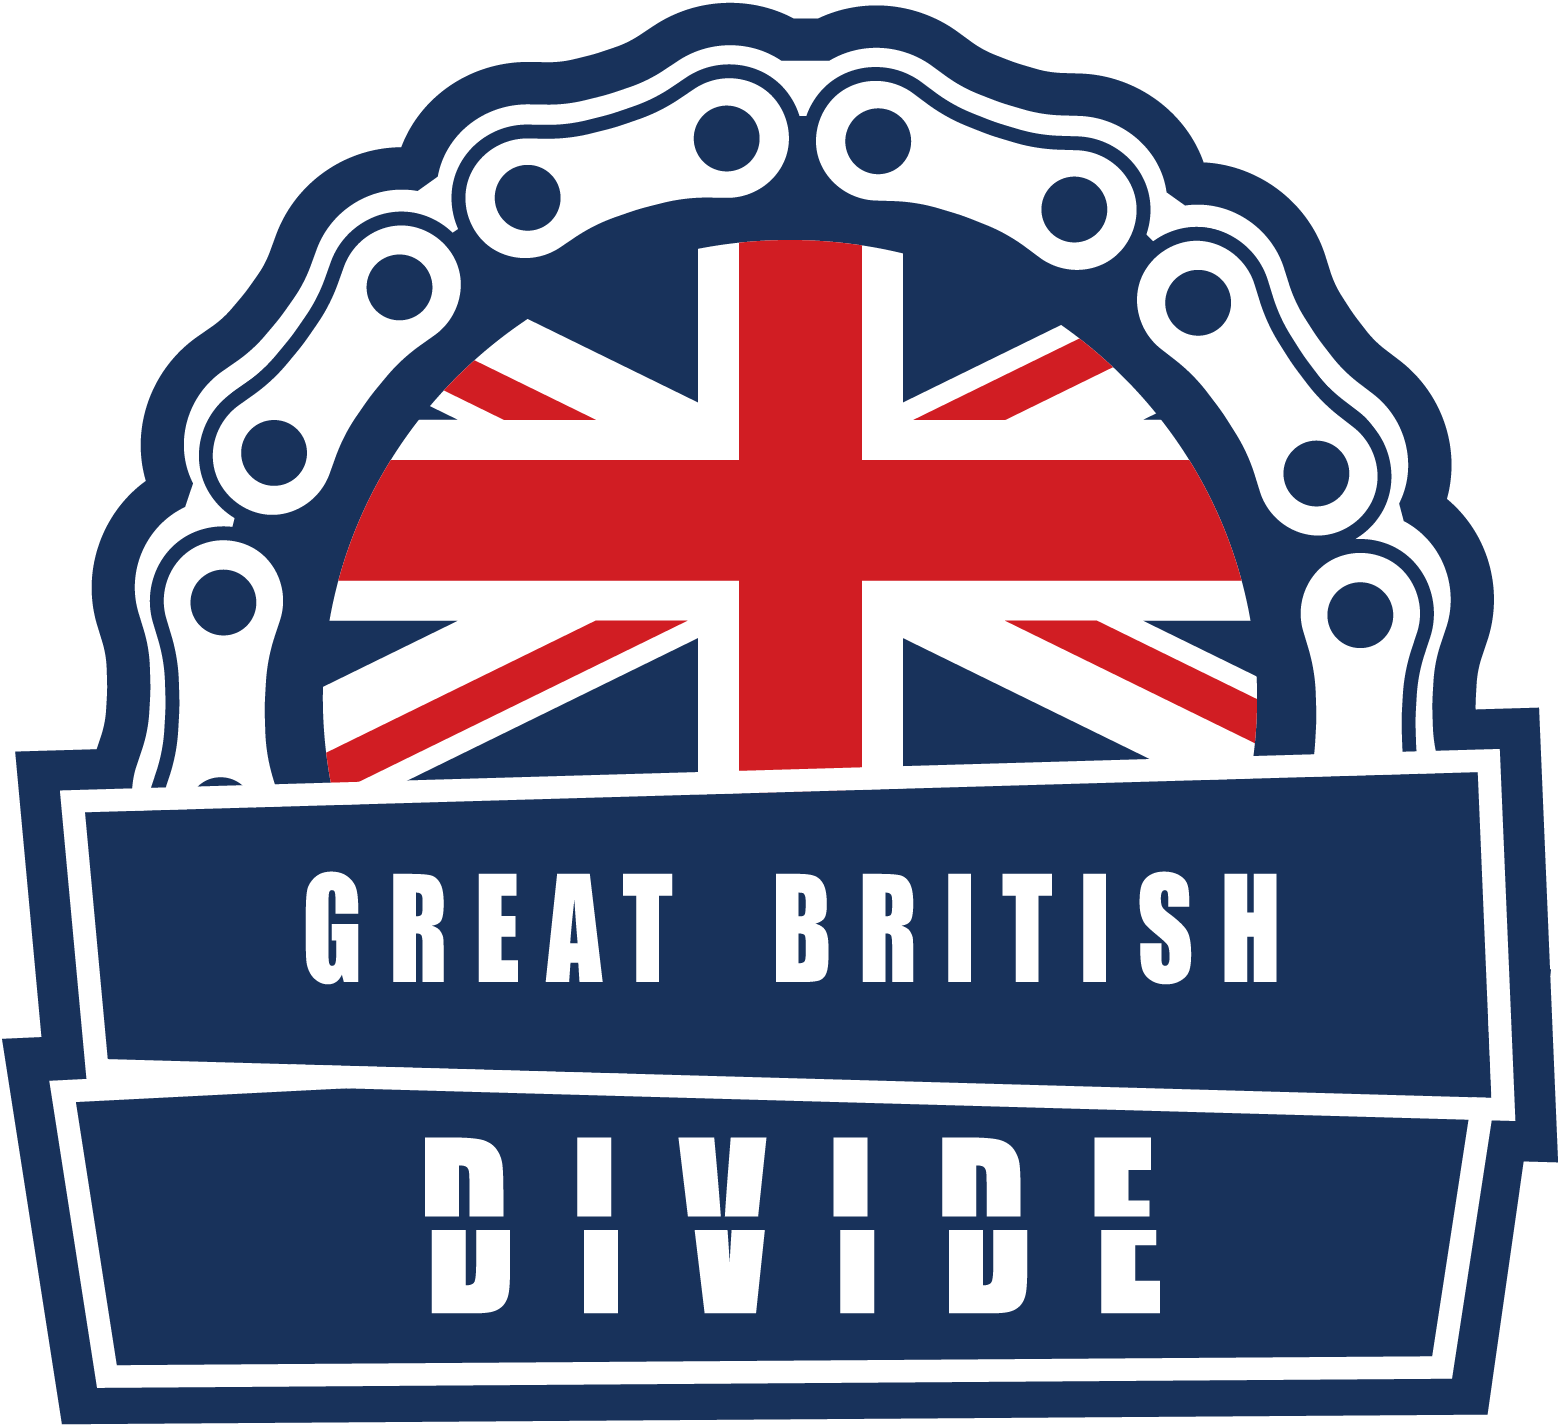 Great British Divide